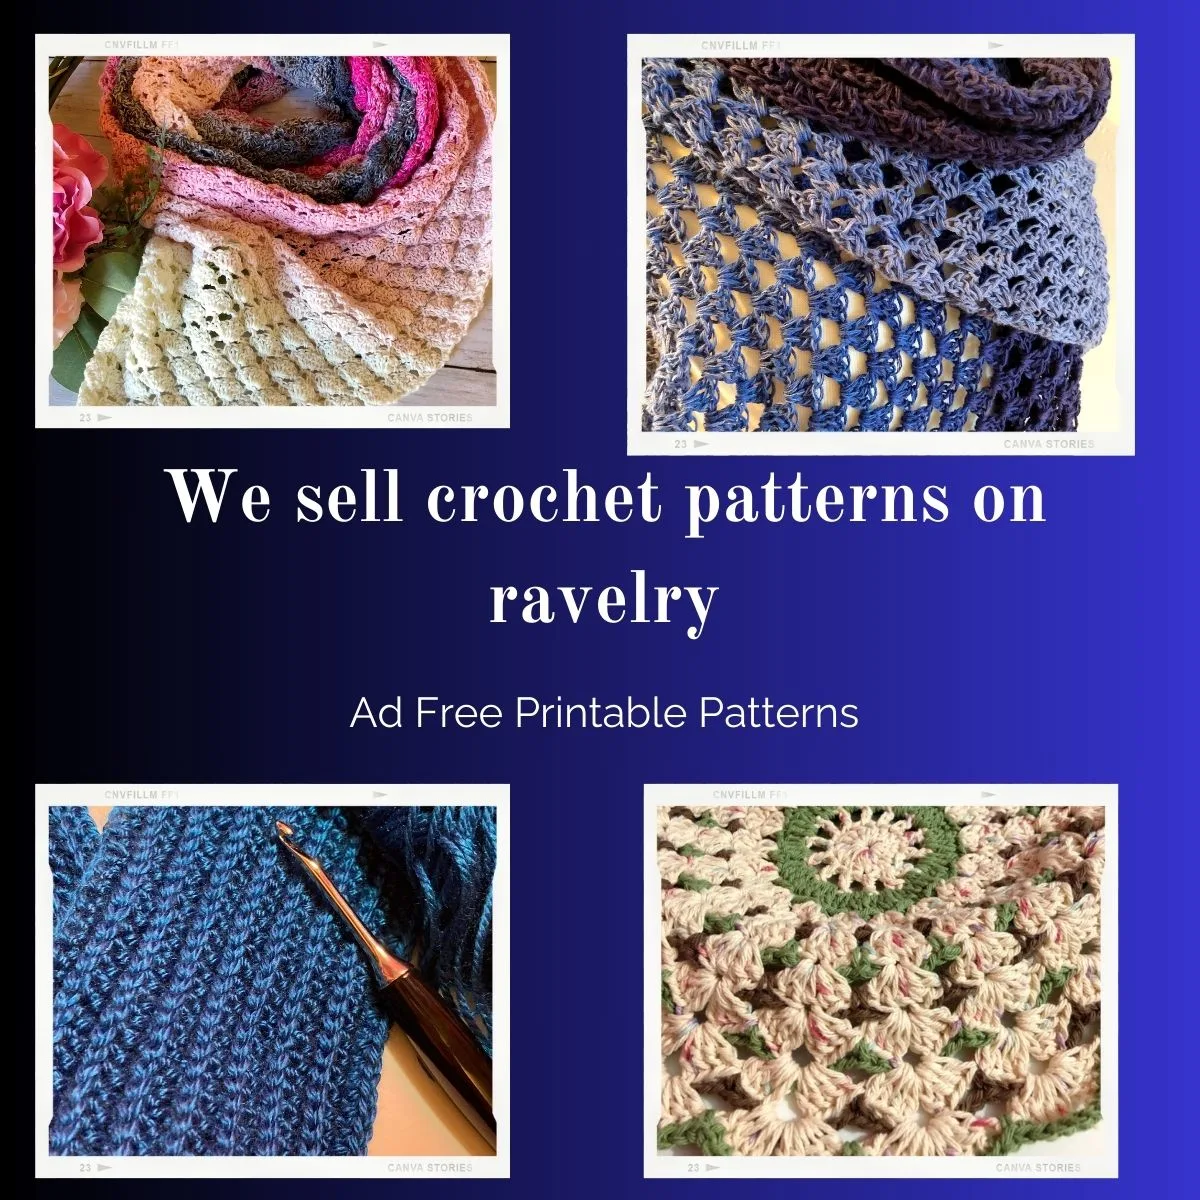 We sell crochet patterns on ravelry